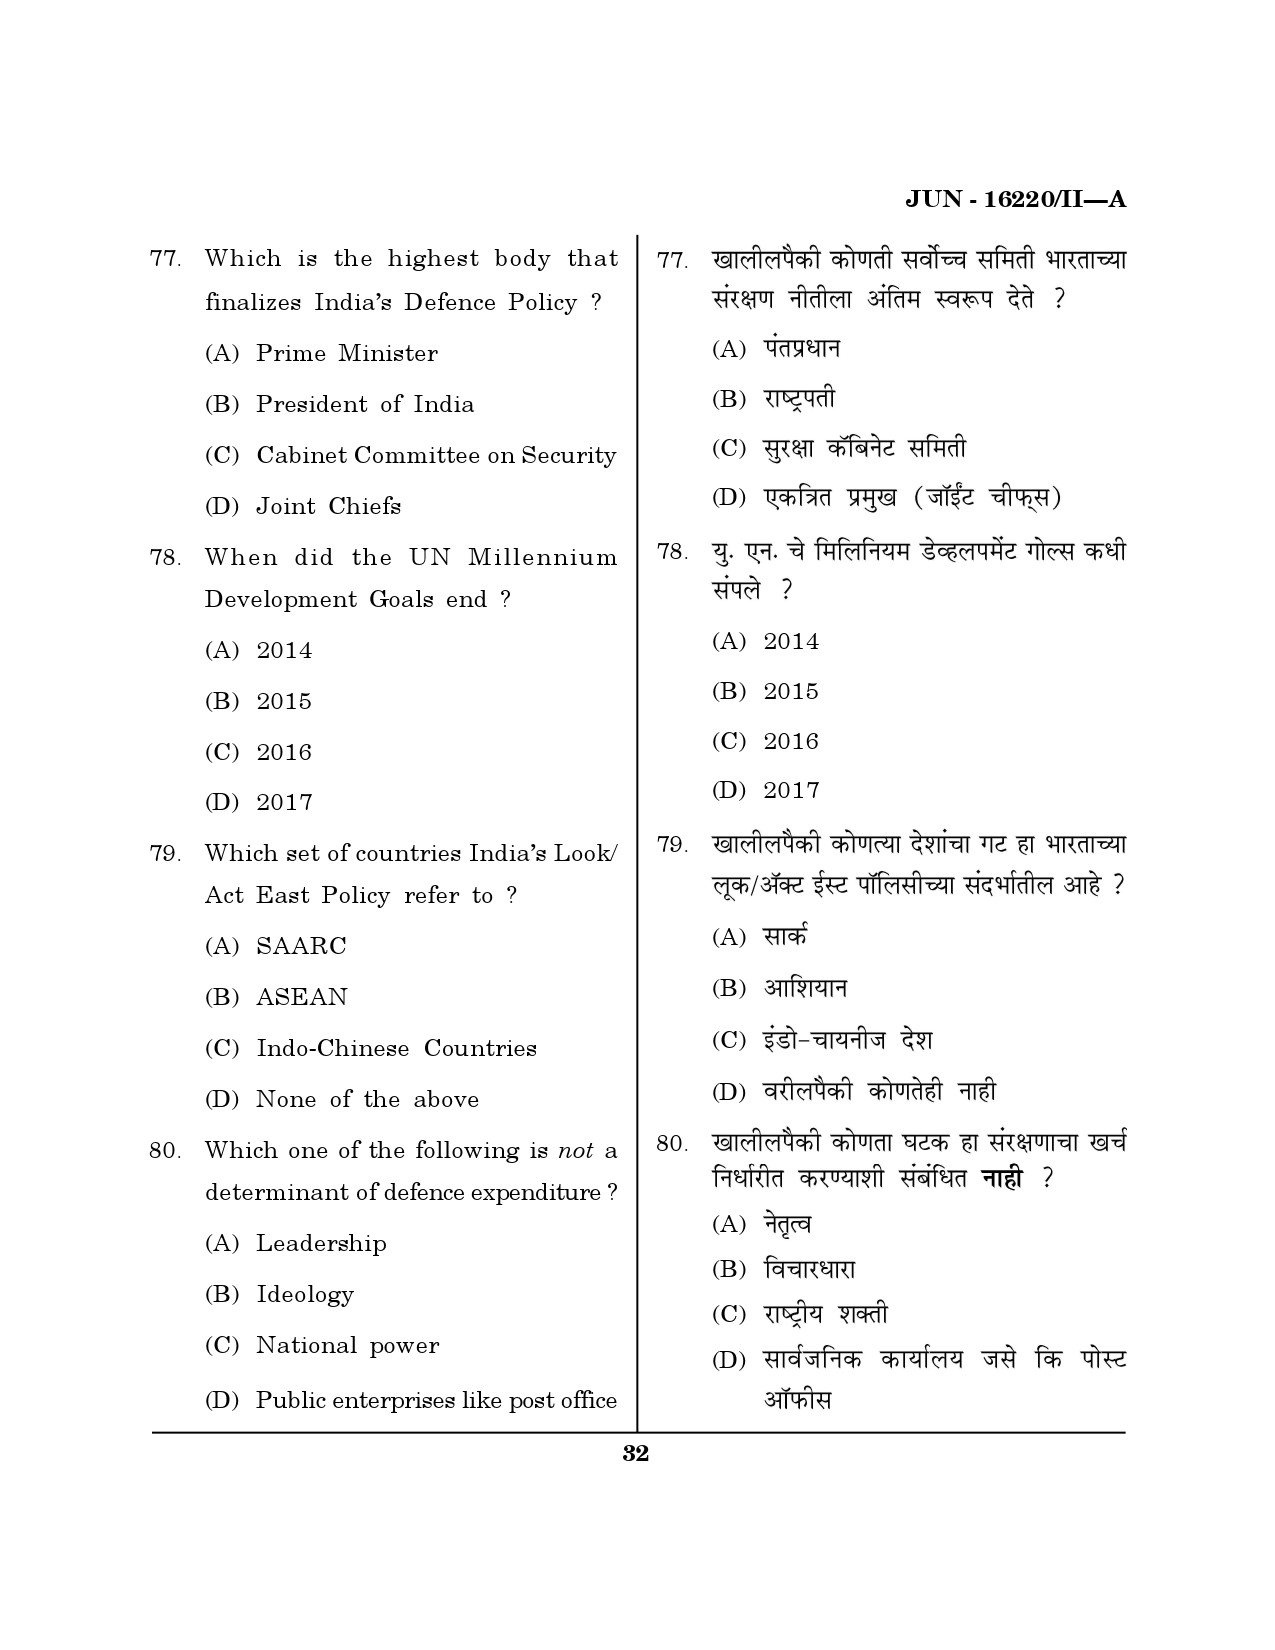 Maharashtra SET Defence and Strategic Studies Question Paper II June 2020 31